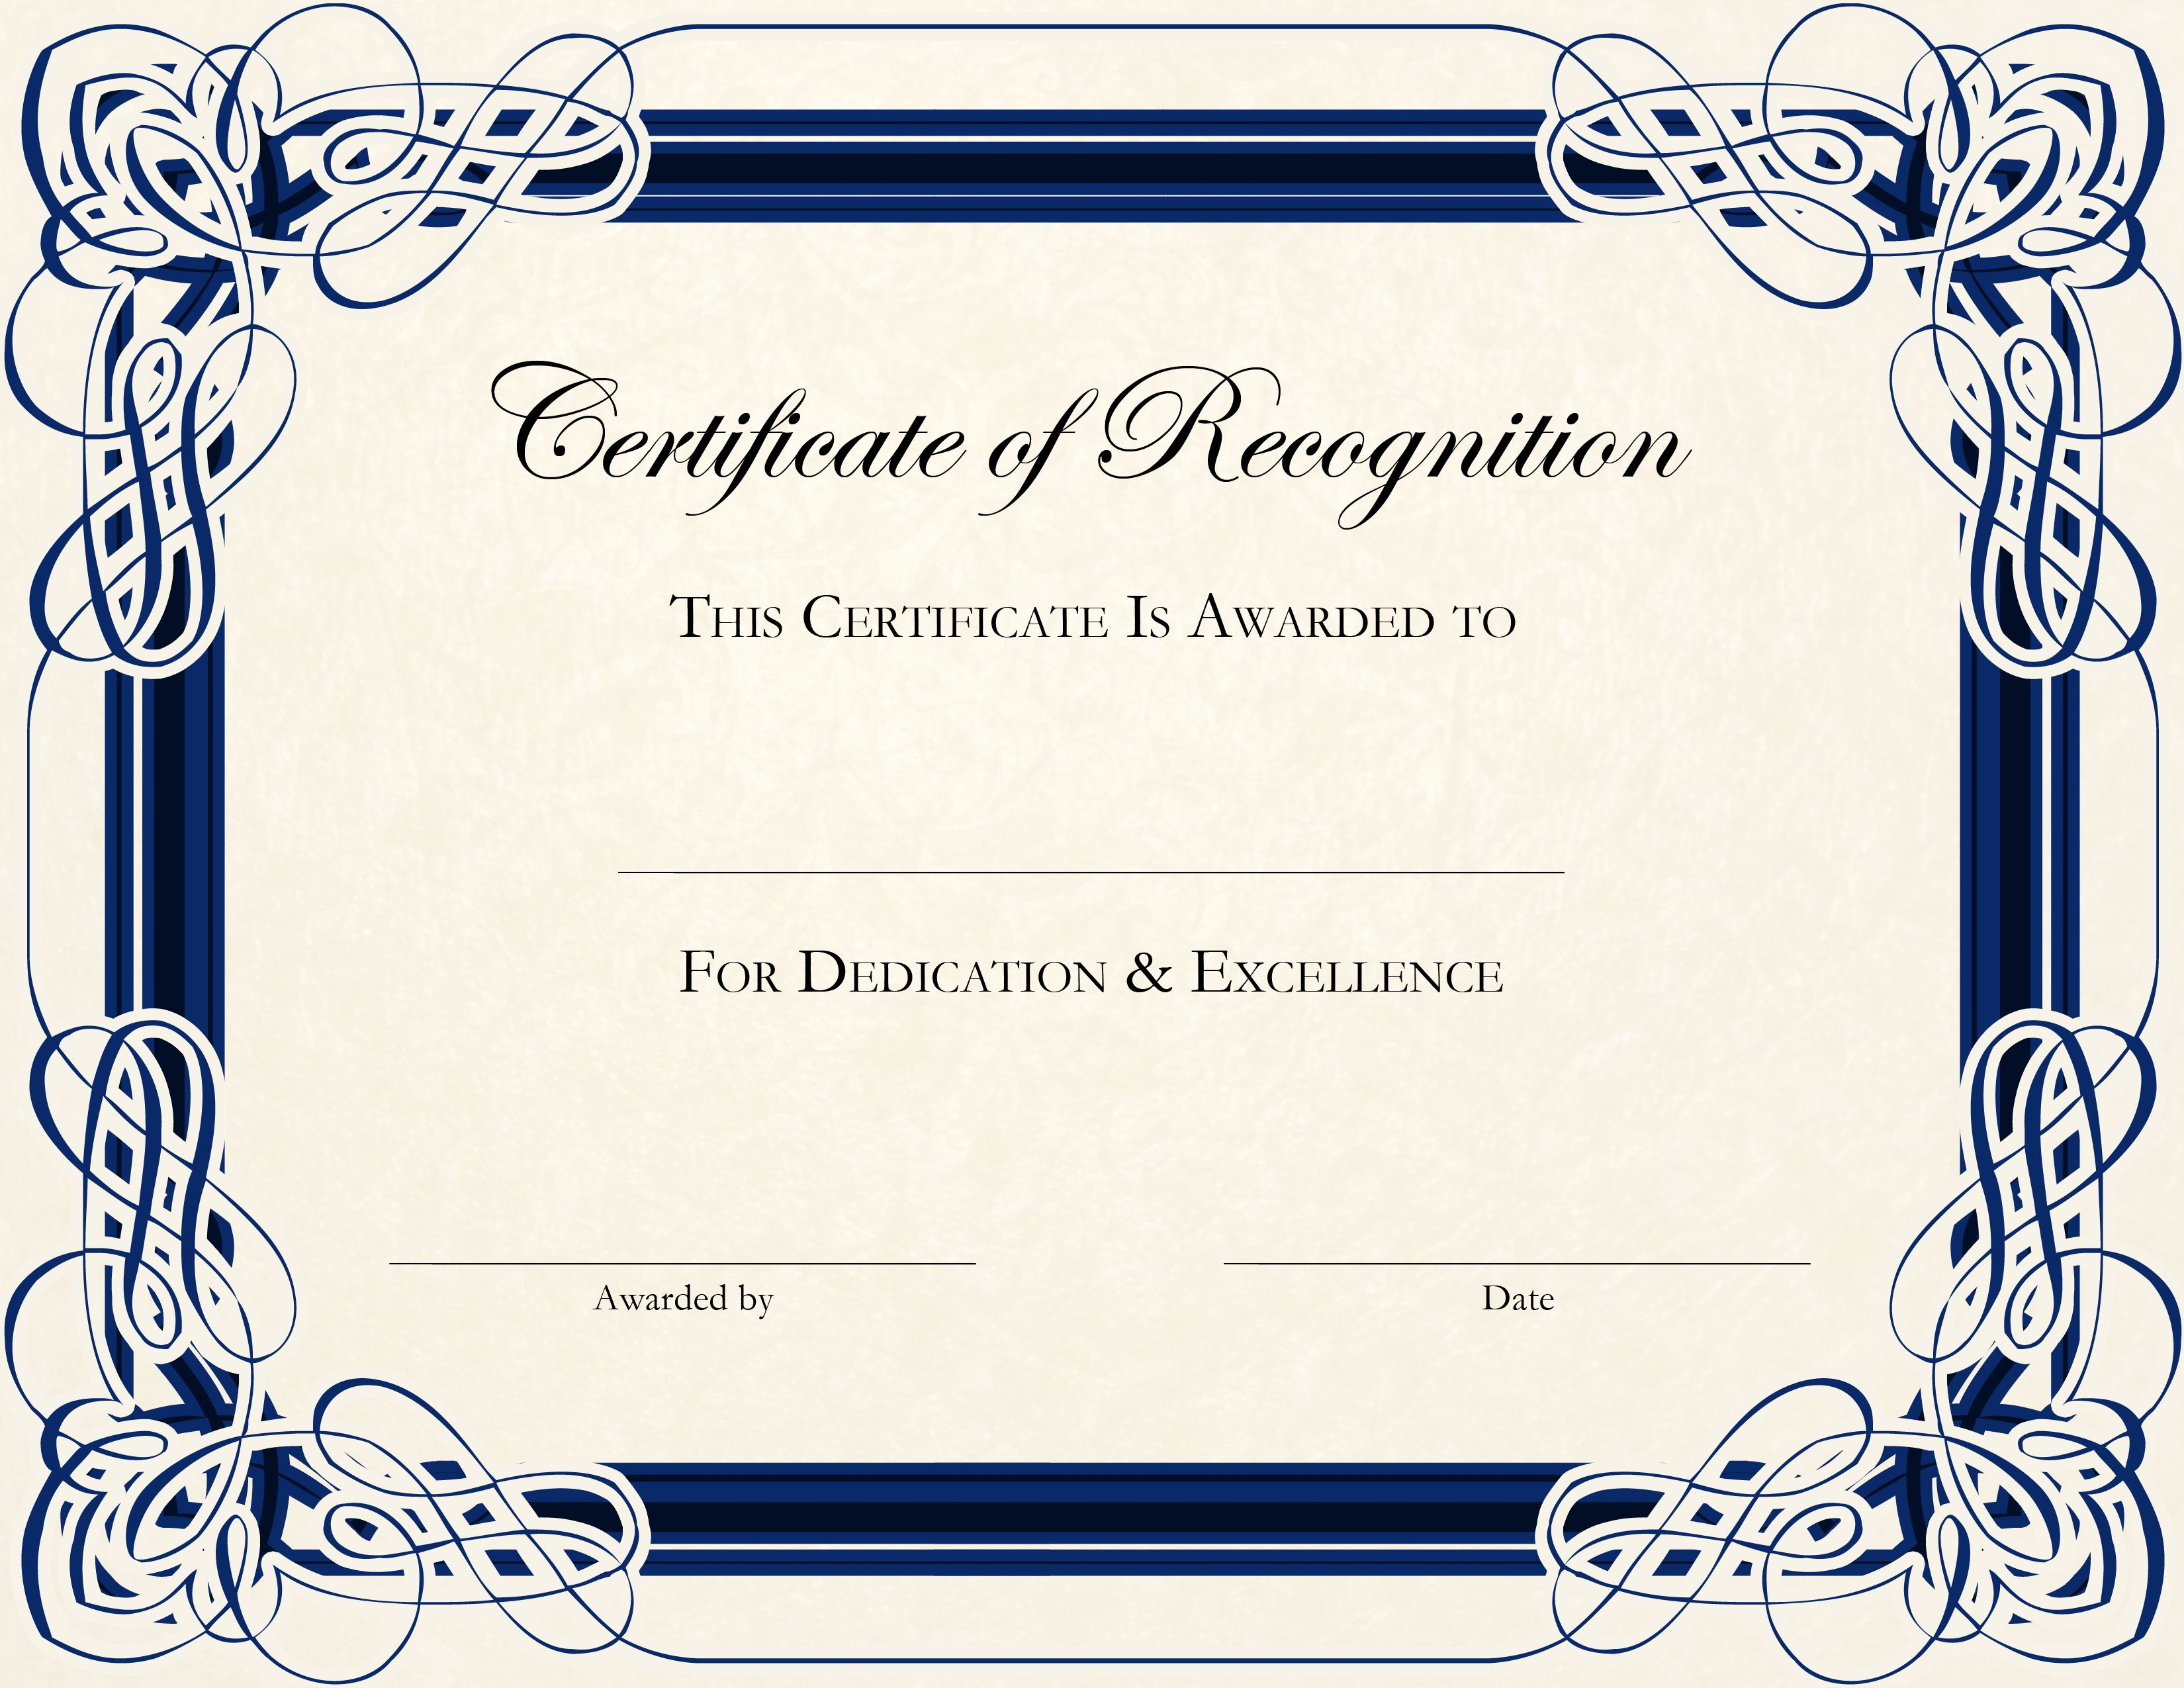 Certificate Of Appreciation Template Word Doc Regarding Certificate Of Excellence Template Word